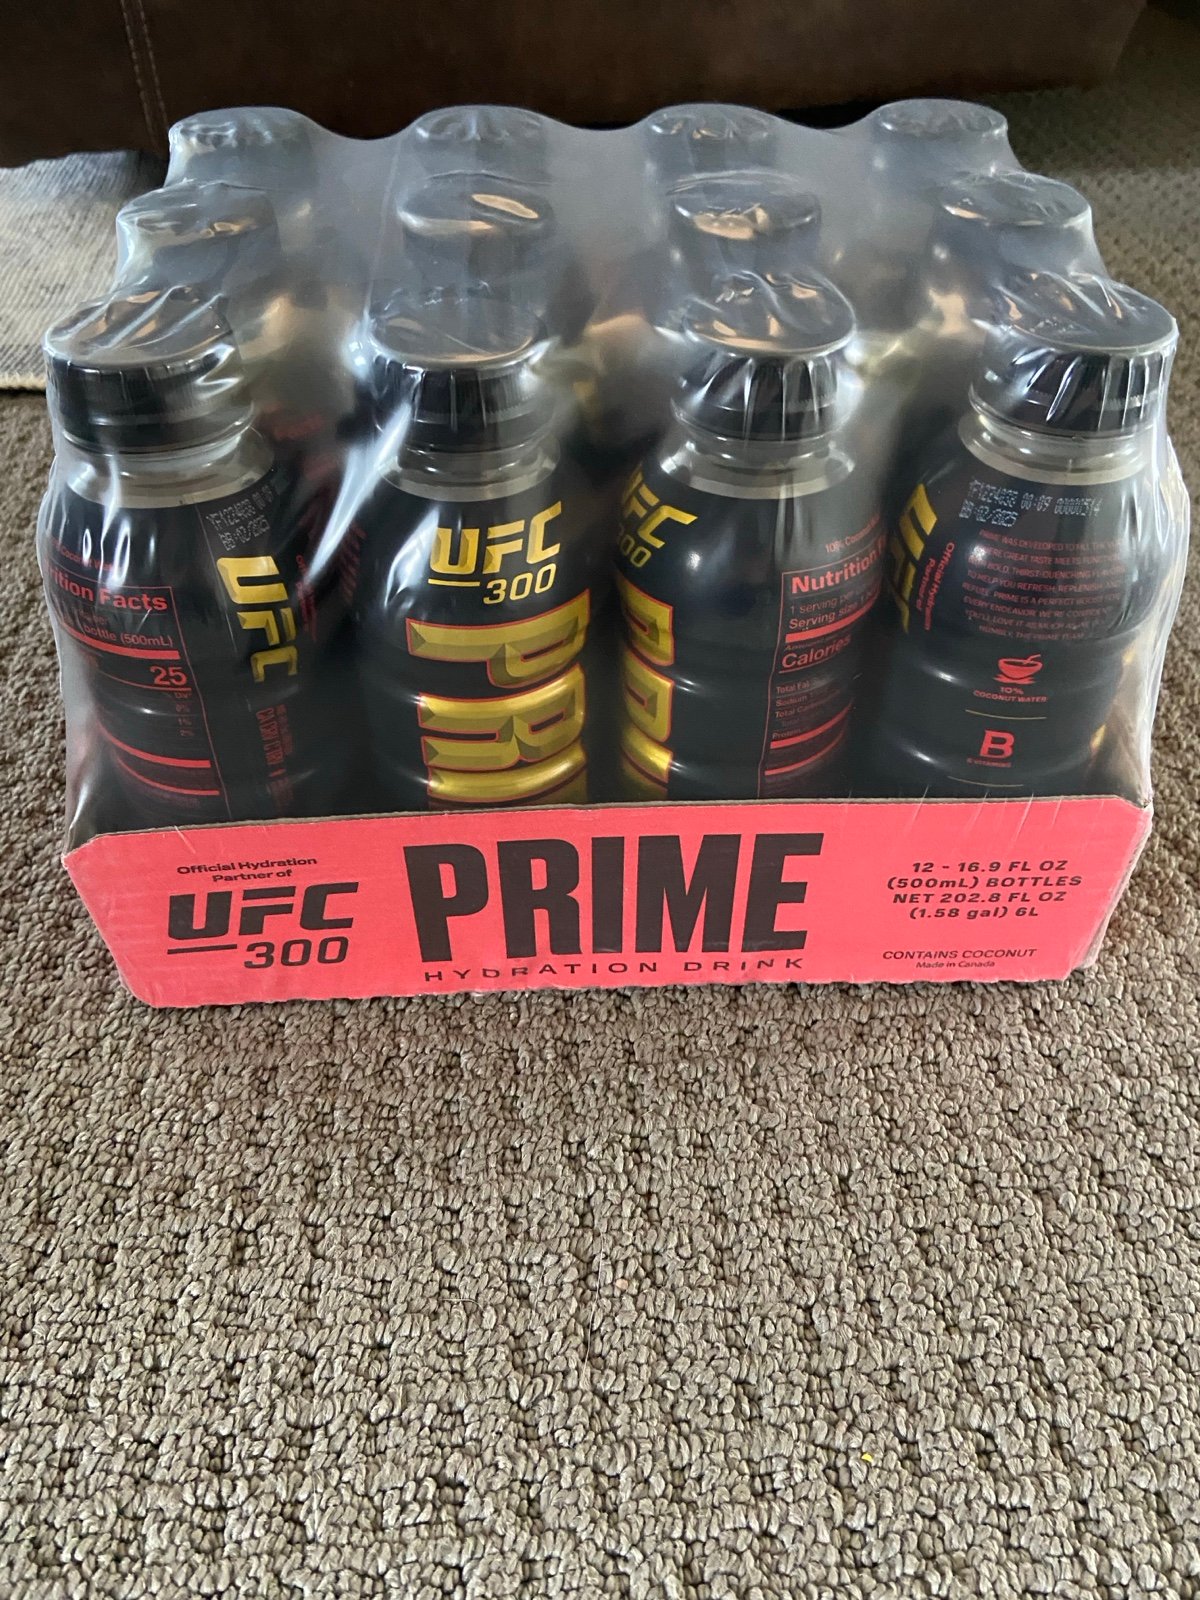 UFC prime 300 limited edition drink brand new sealed jUM2f9k5c